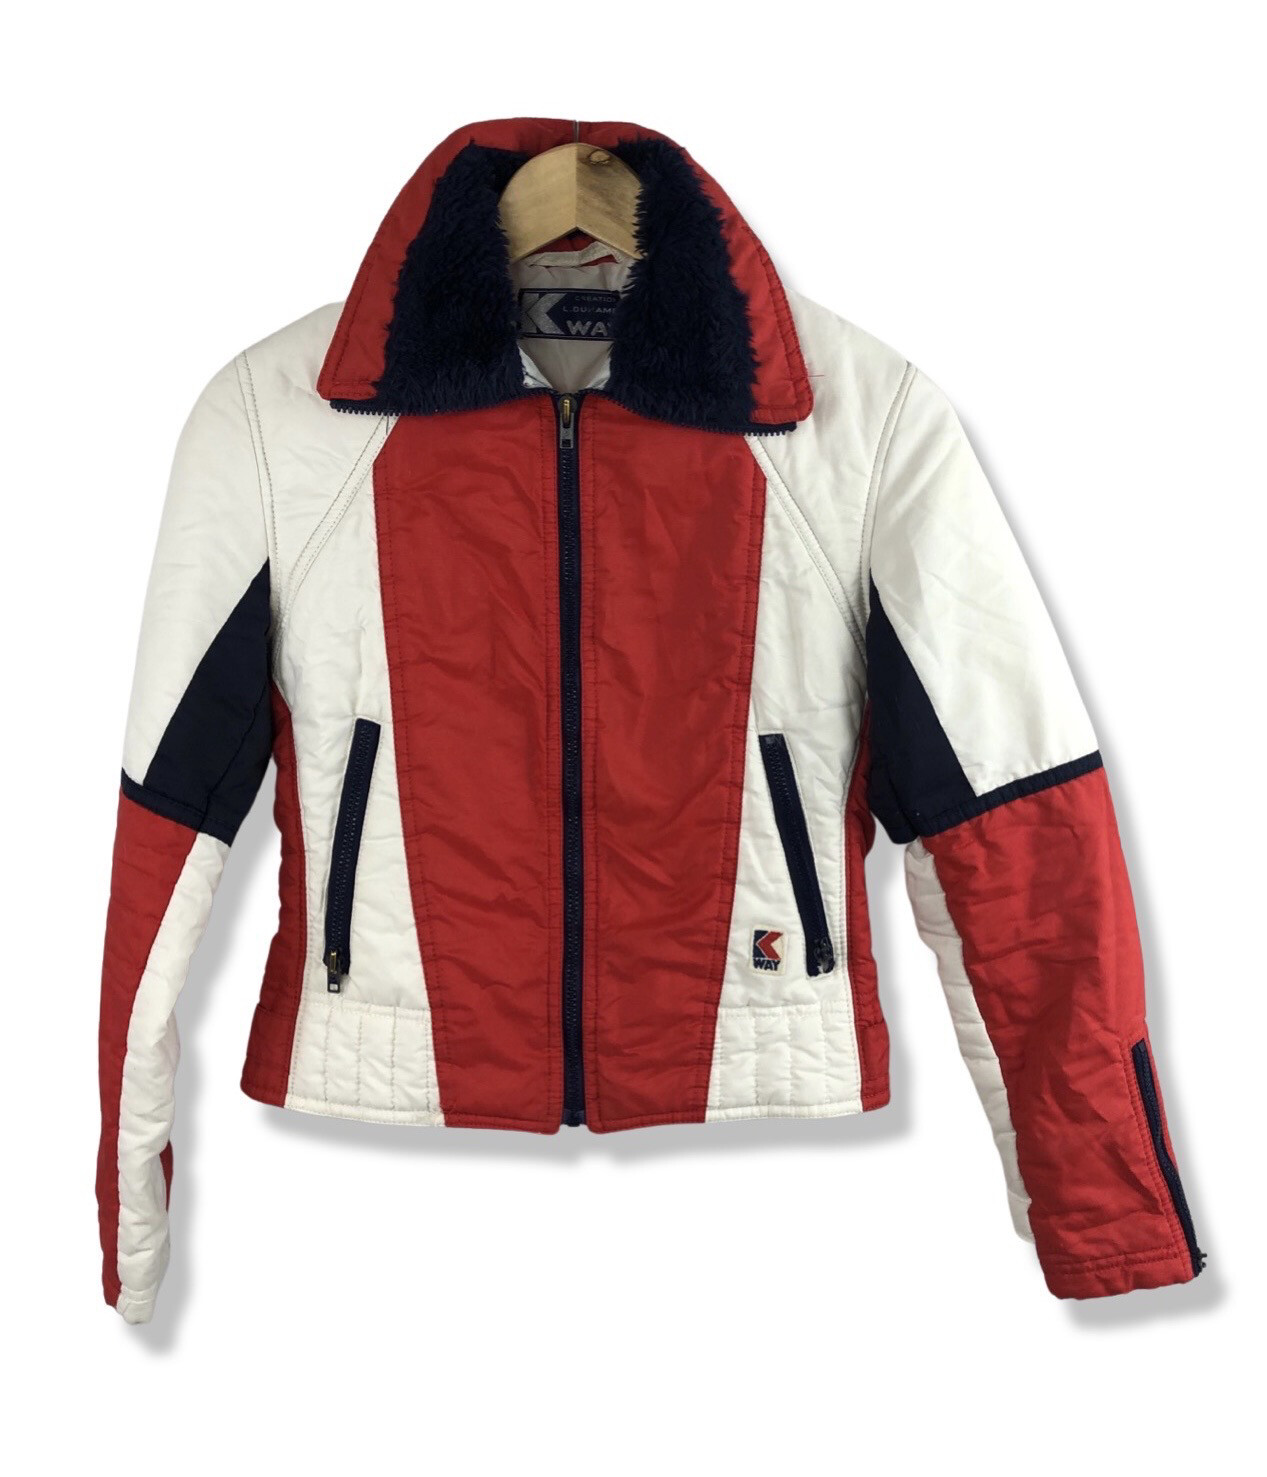 1970’s Ski Jacket